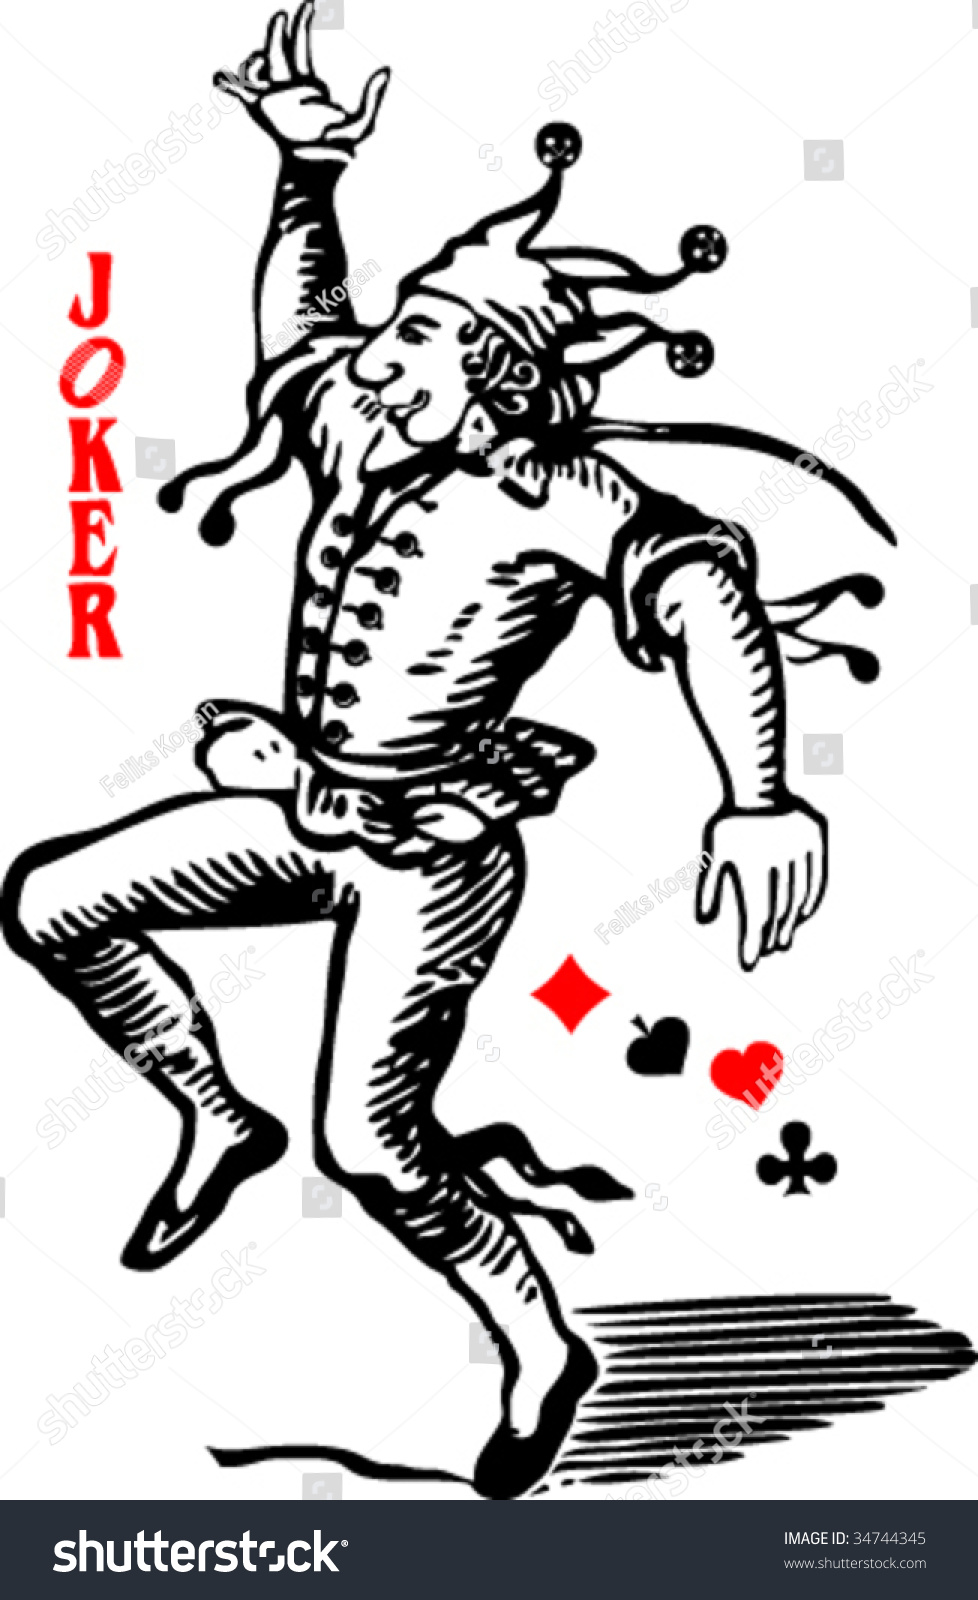 Joker Playing Card Stock Vector (Royalty Free) 34744345